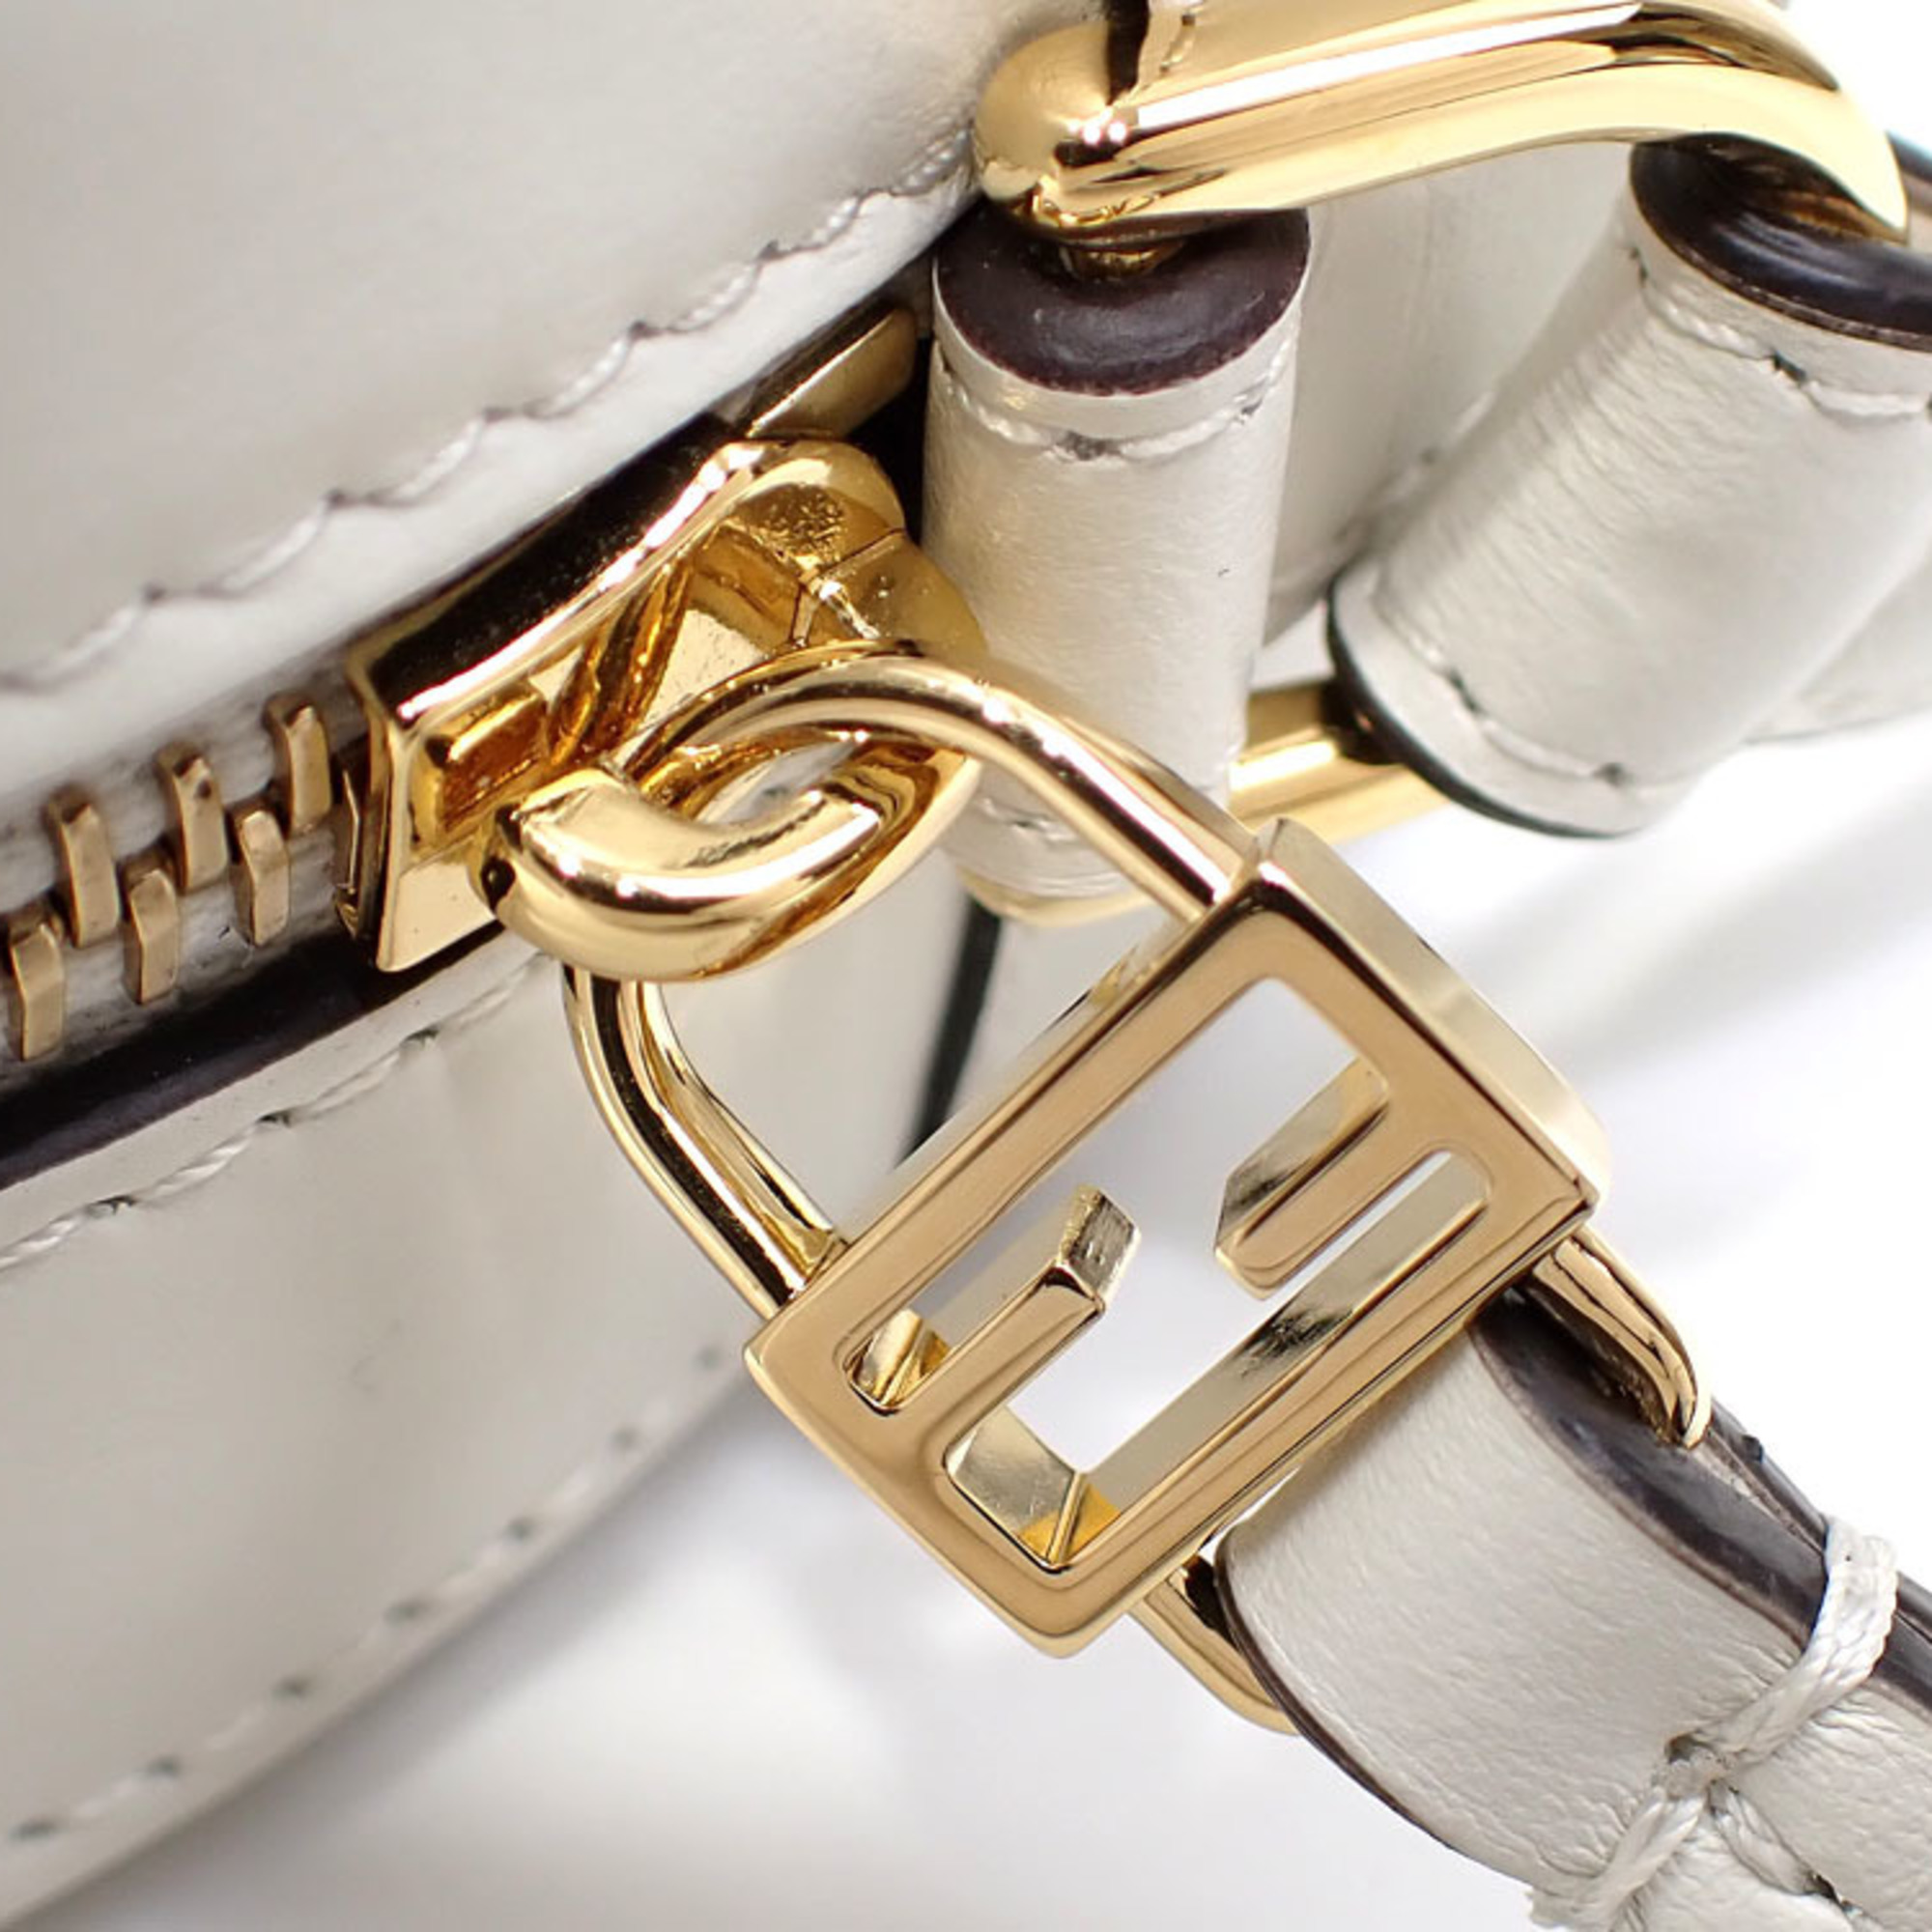 Fendi Shoulder Bag Camera Case Women's White Leather 8BS077 A6046772